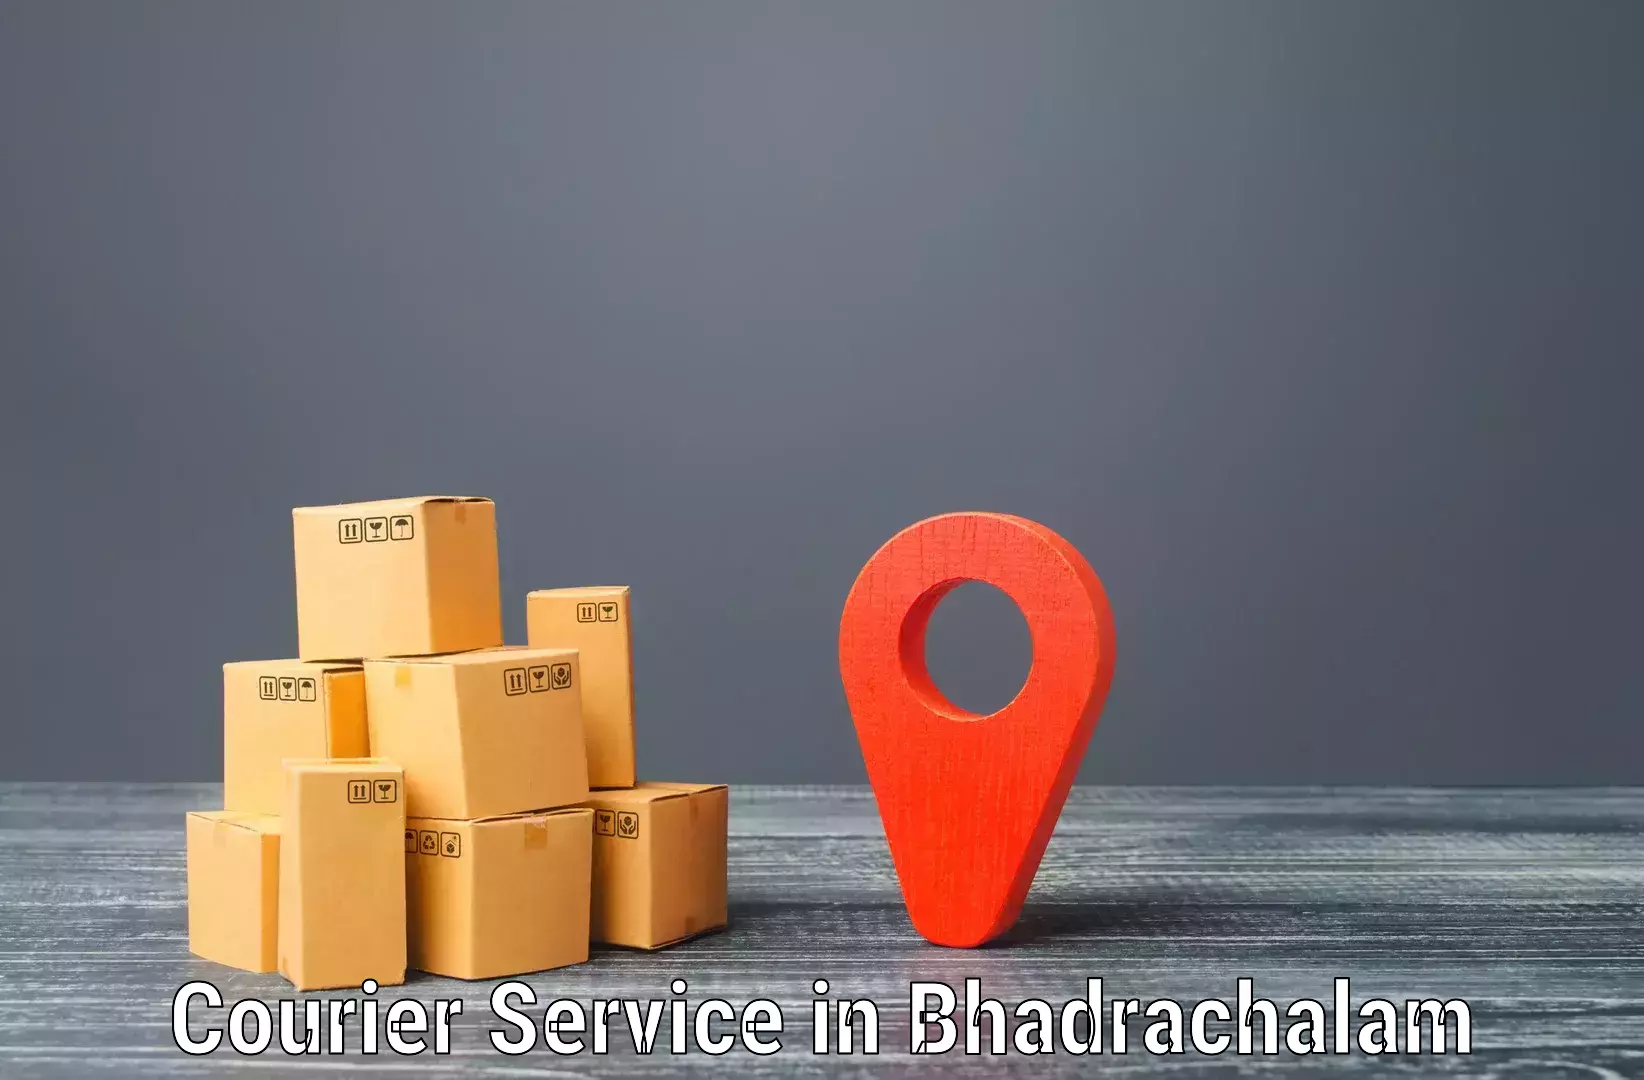 Efficient parcel service in Bhadrachalam